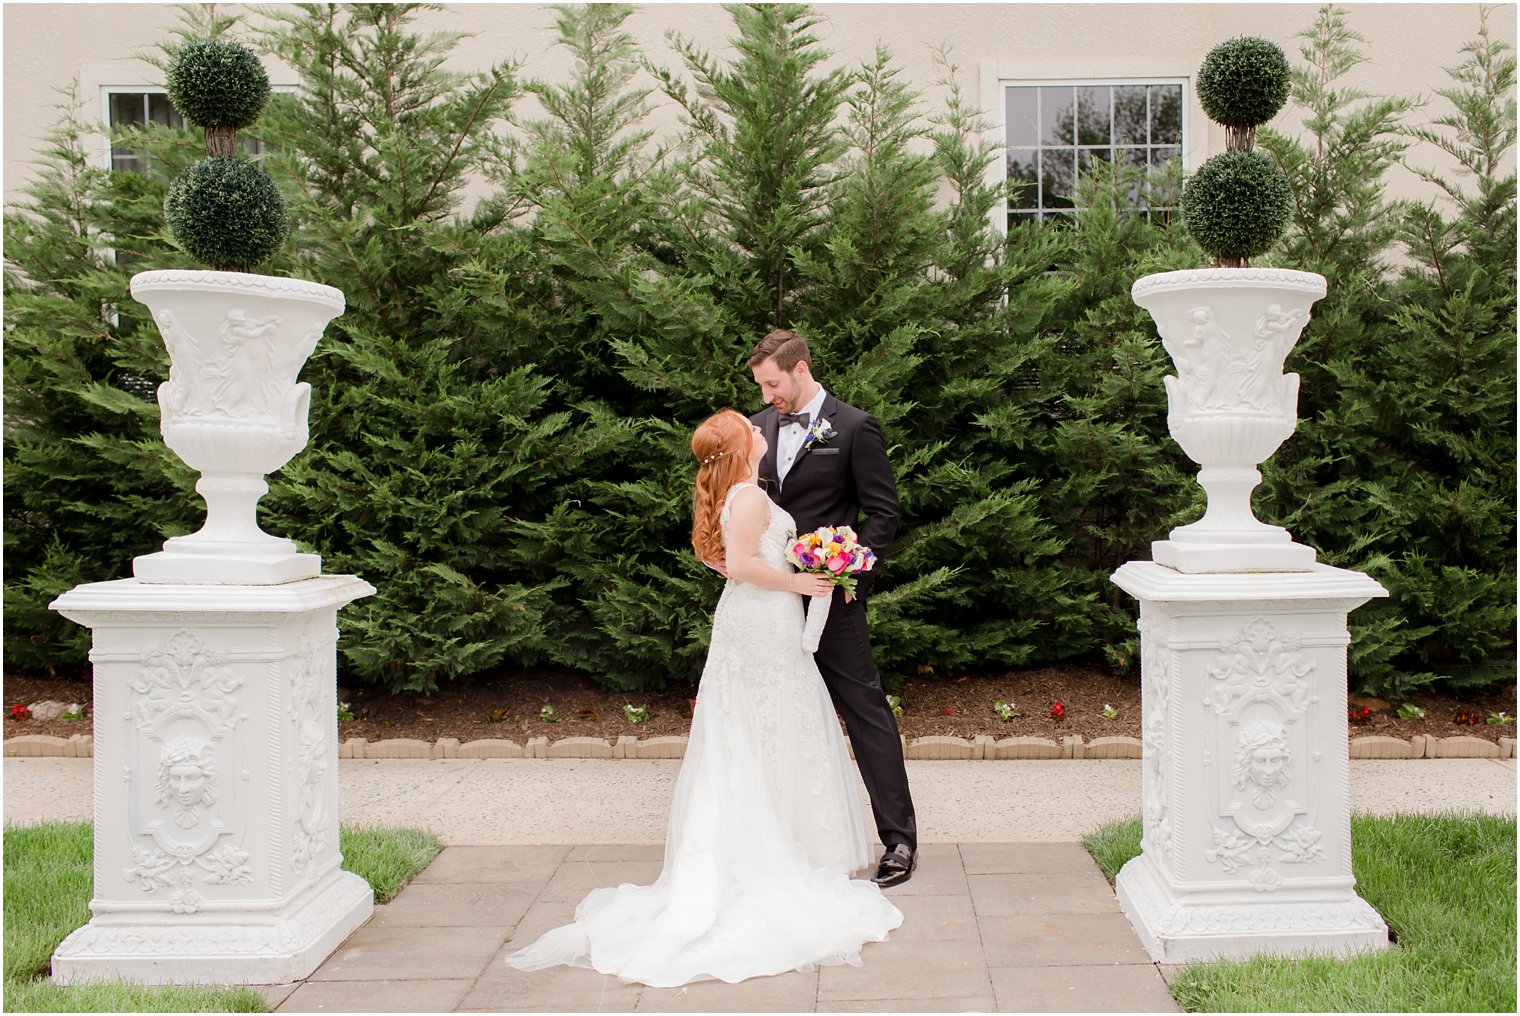 Romantic bride and groom photo | Photos at Wilshire Grand | Photos by Idalia Photography